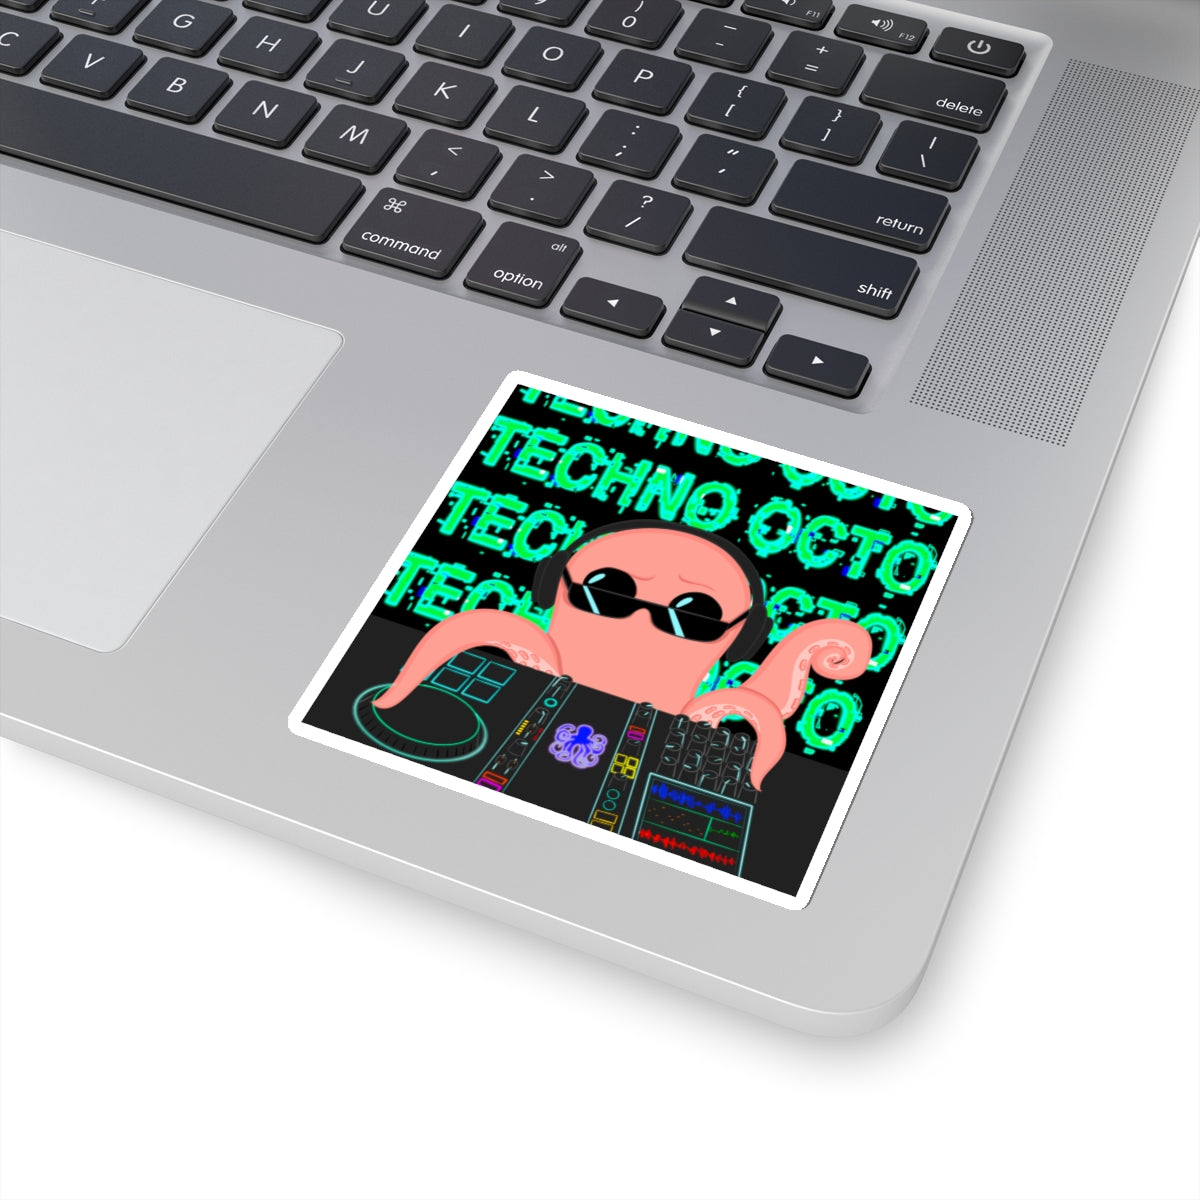 Techno Octo Stickers | Octopus Revolution